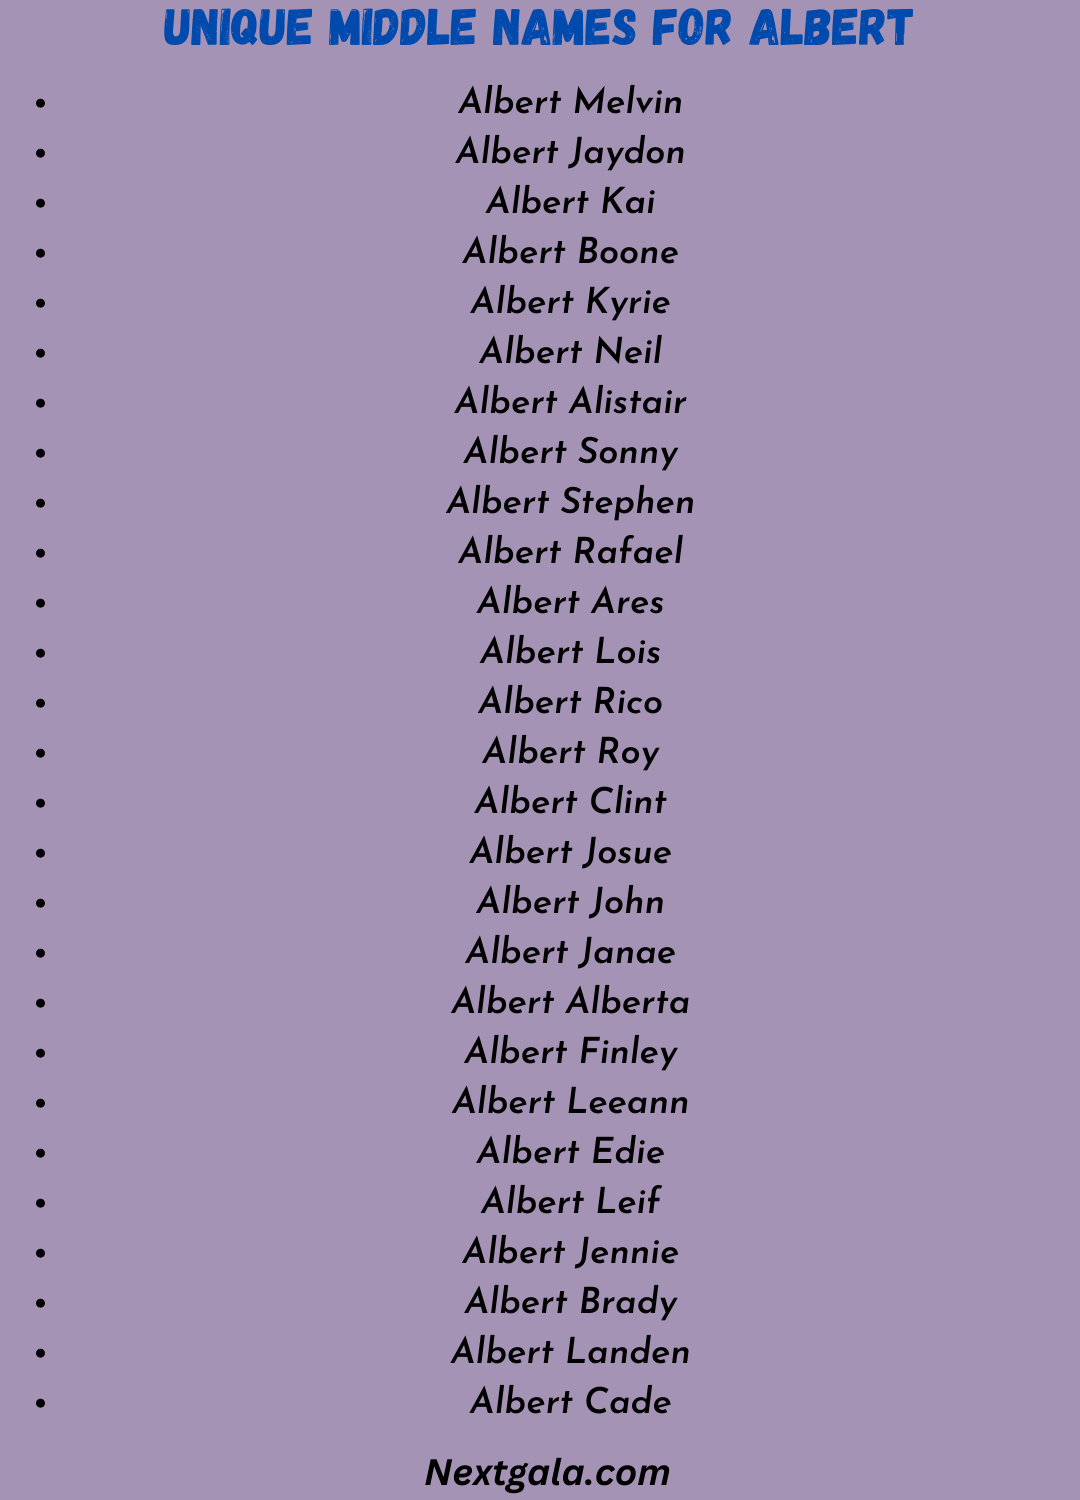 Unique Middle Names for Albert